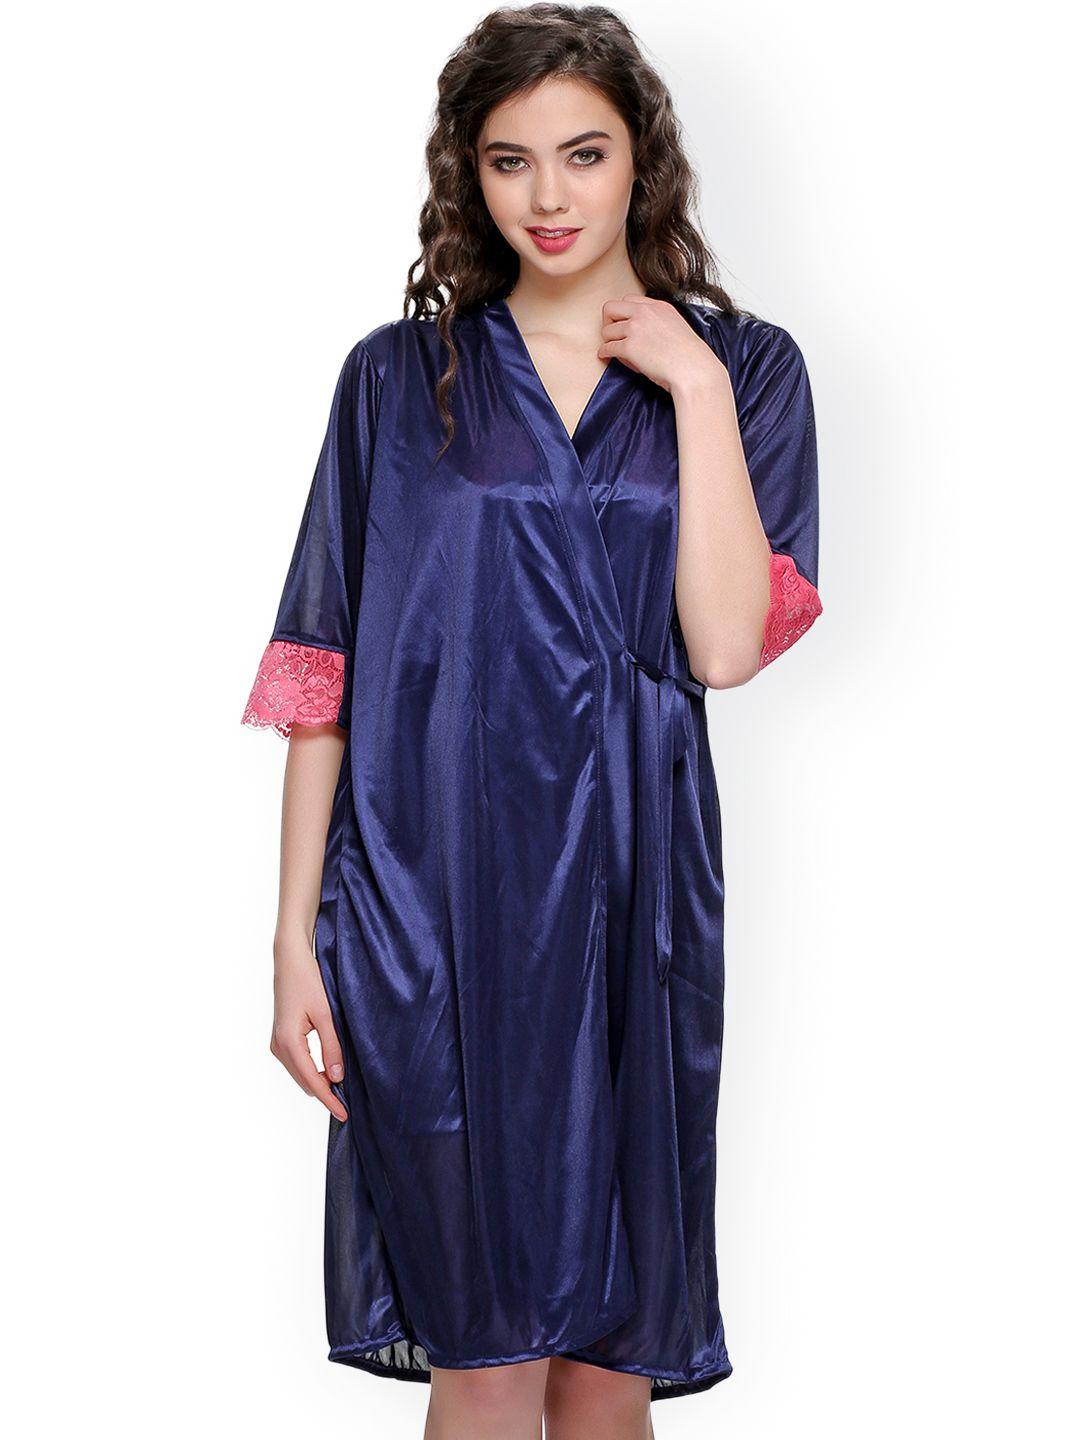 clovia blue nightdress set nsm294g08o